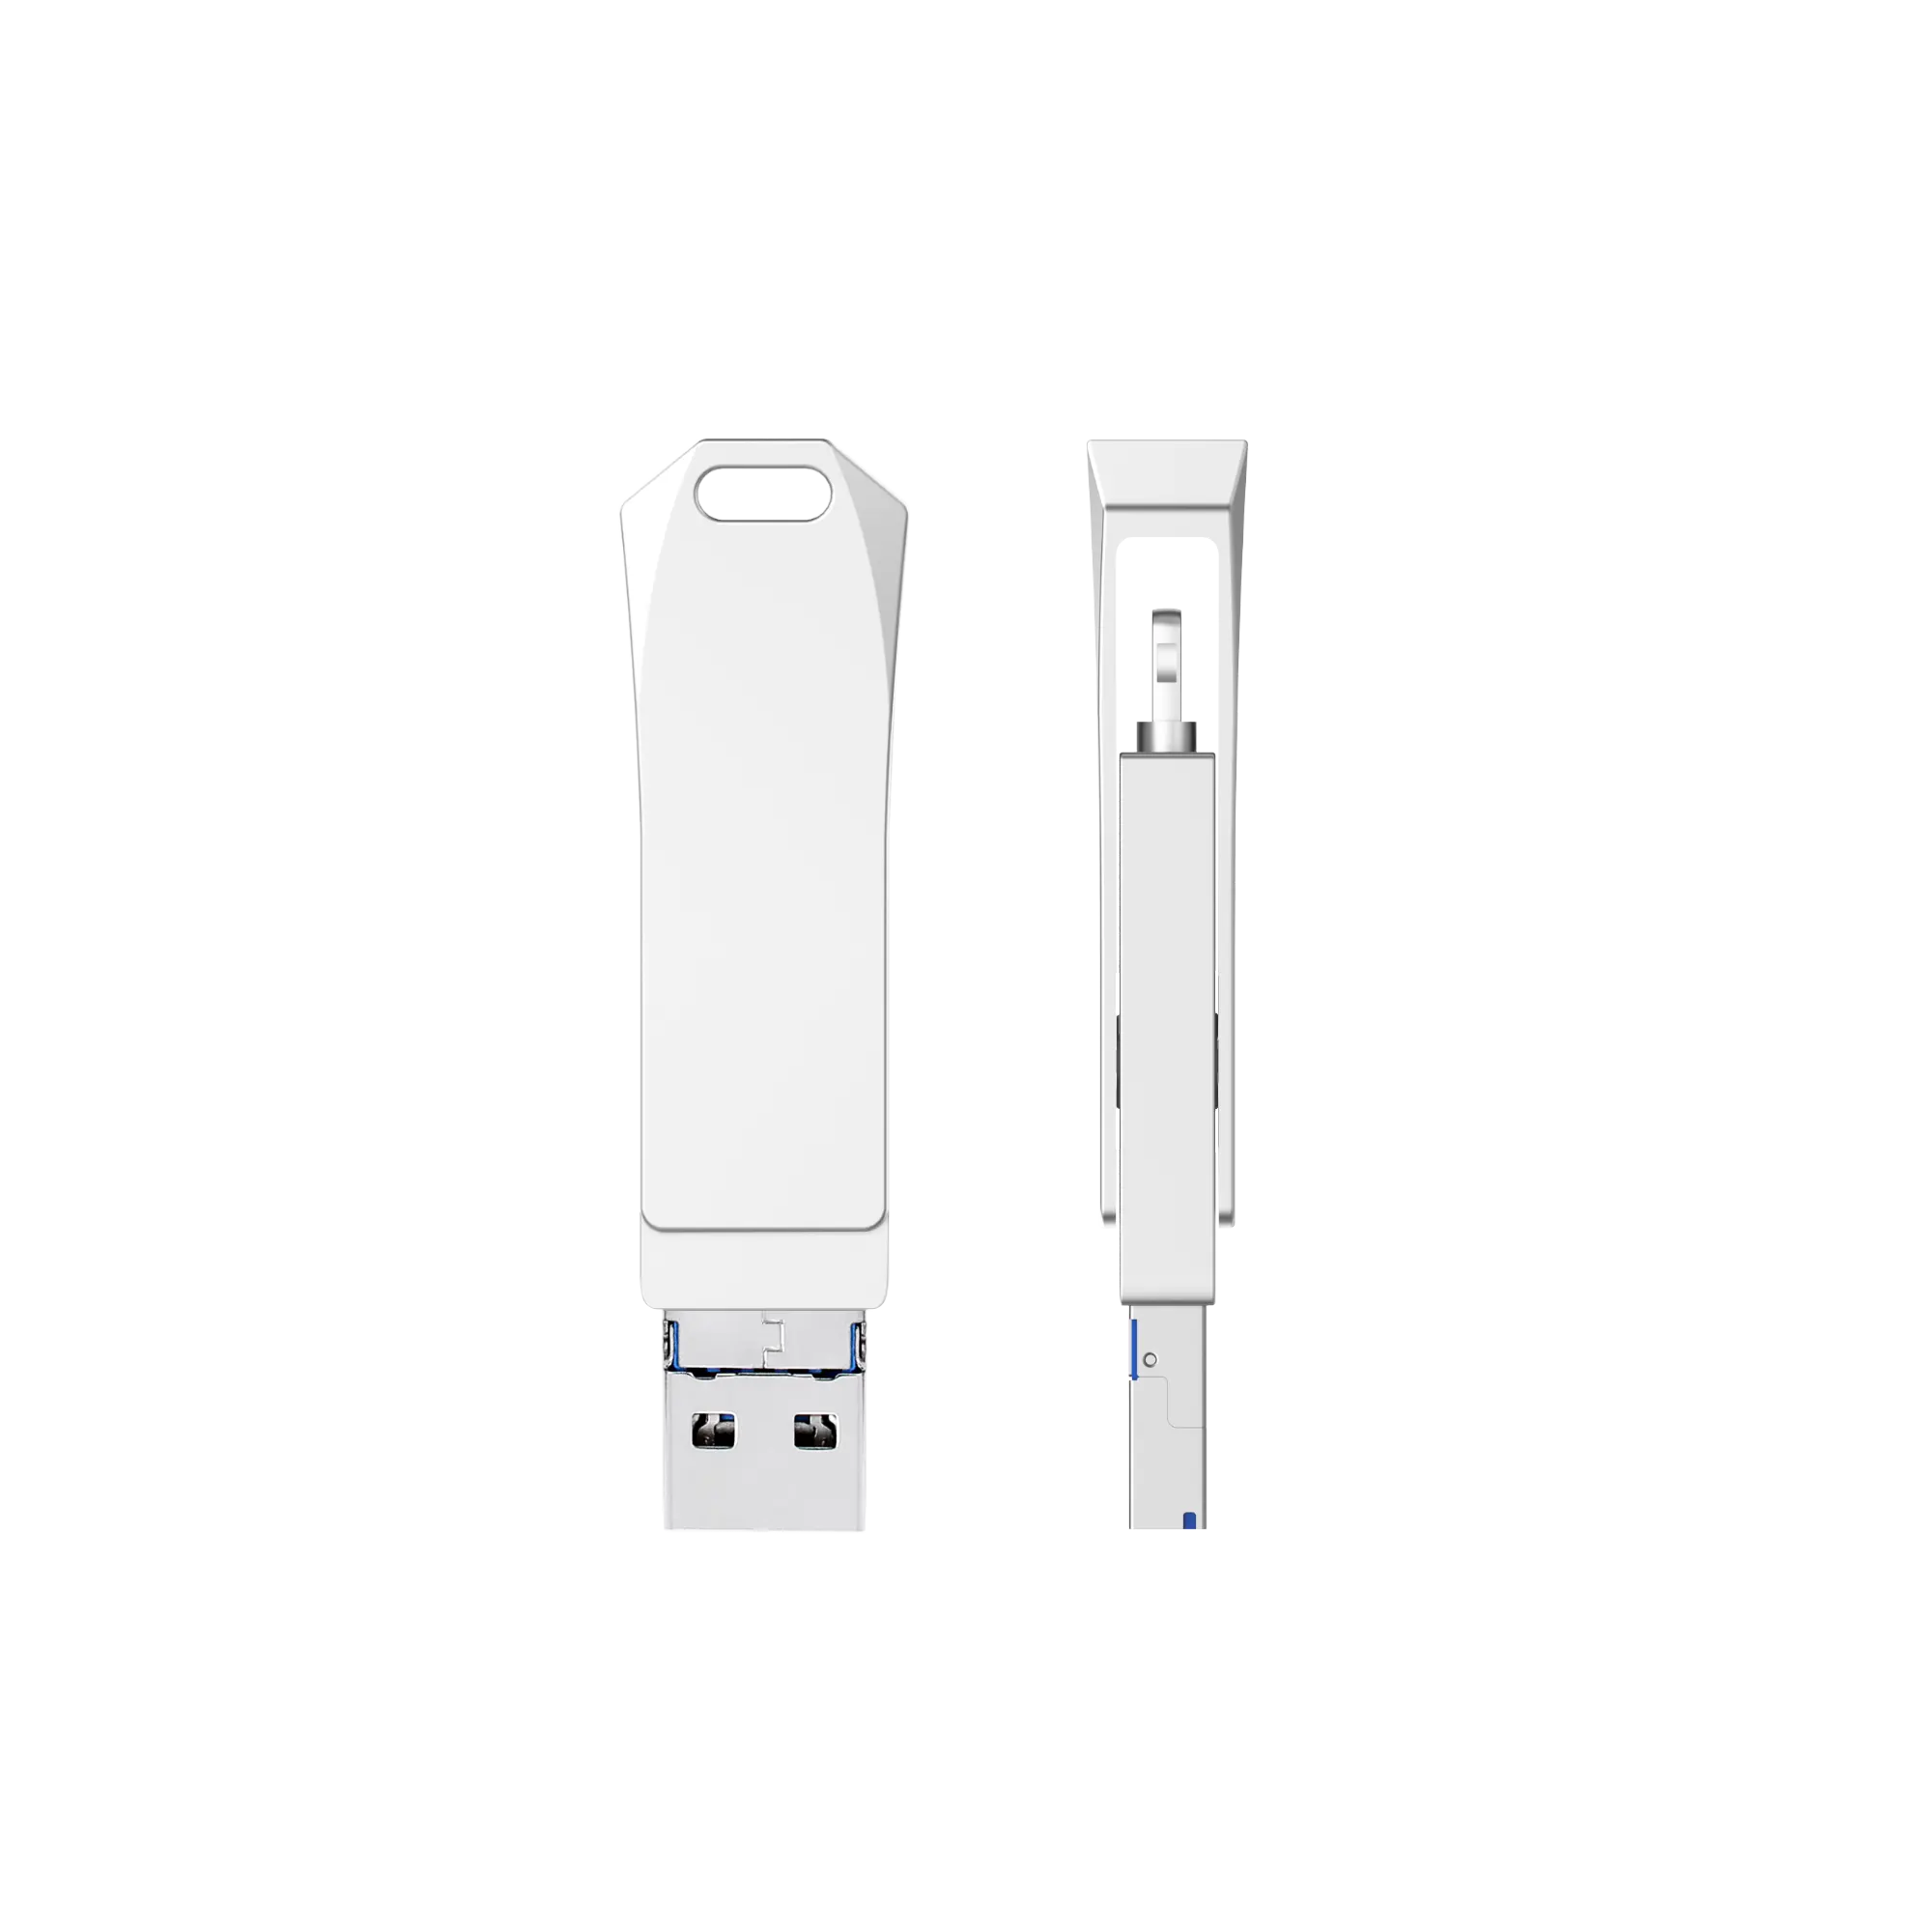 3 in 1 USB 3.0 cle Metall USB-Flash-Laufwerk 4 in 1 32GB 64GB 128GB OTG USB-Flash-Laufwerk Gerät für iPhone OTG